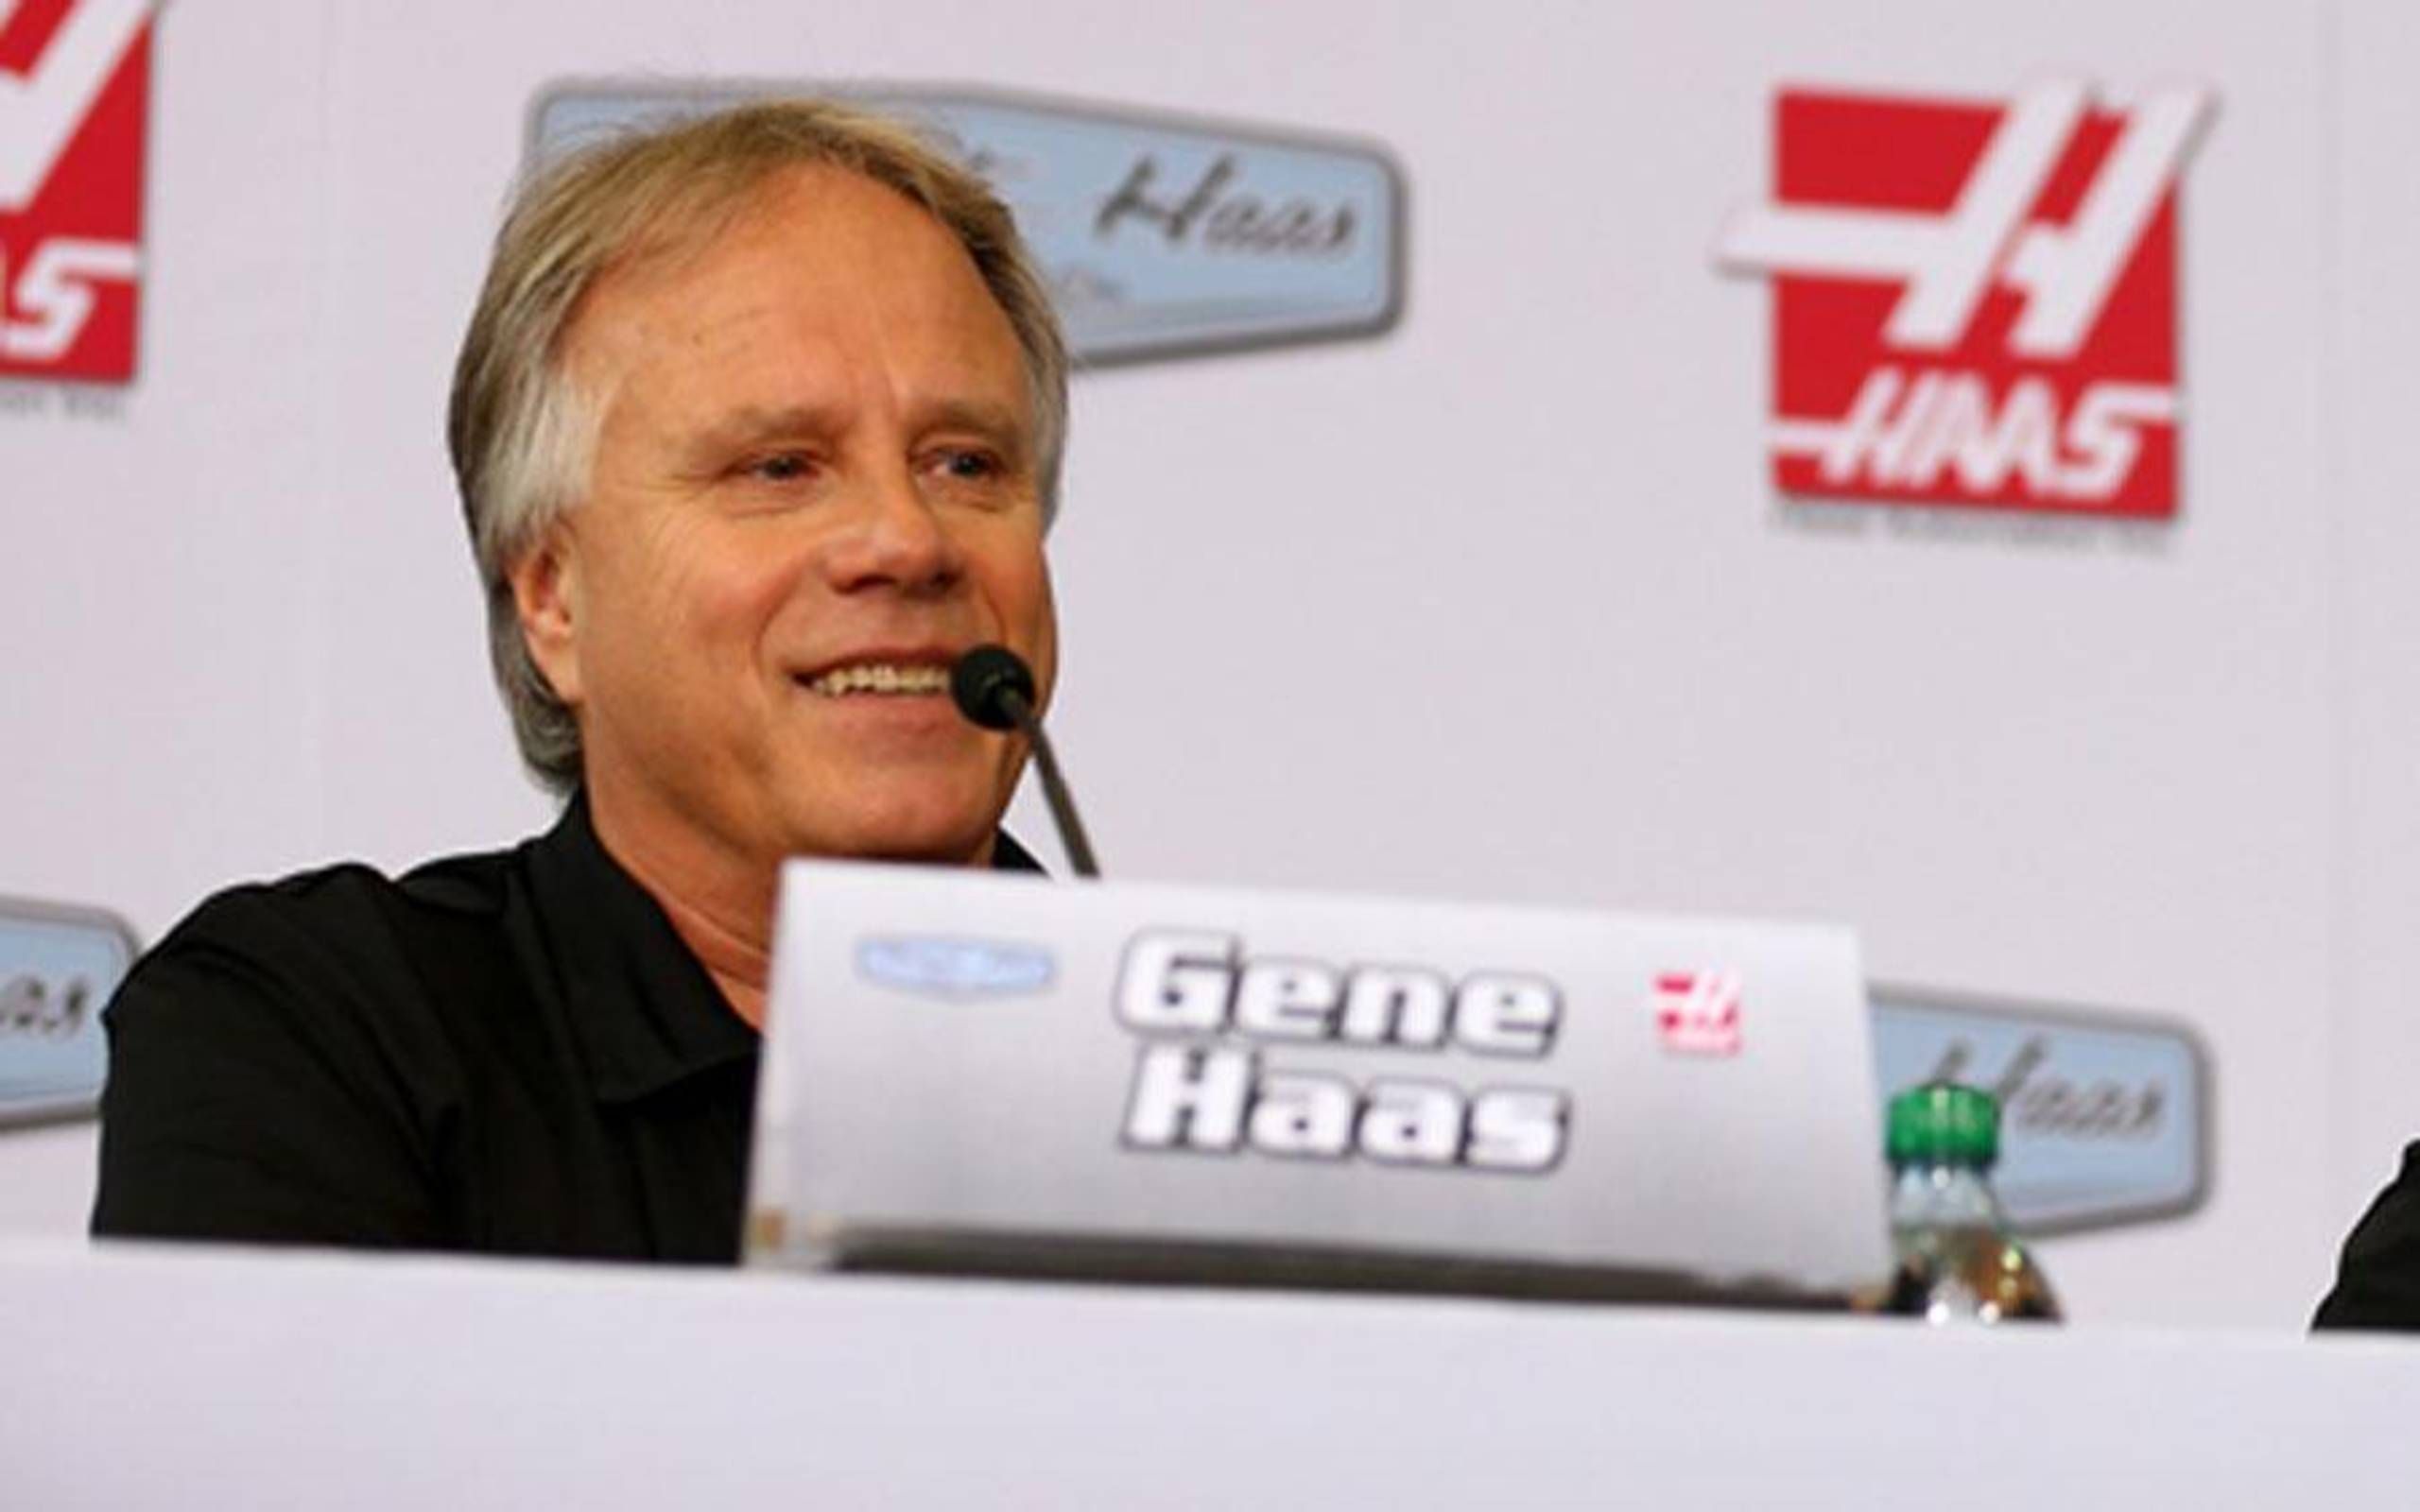 Kannapolis-based Haas F1 Team preps for Sao Paulo Grand Prix